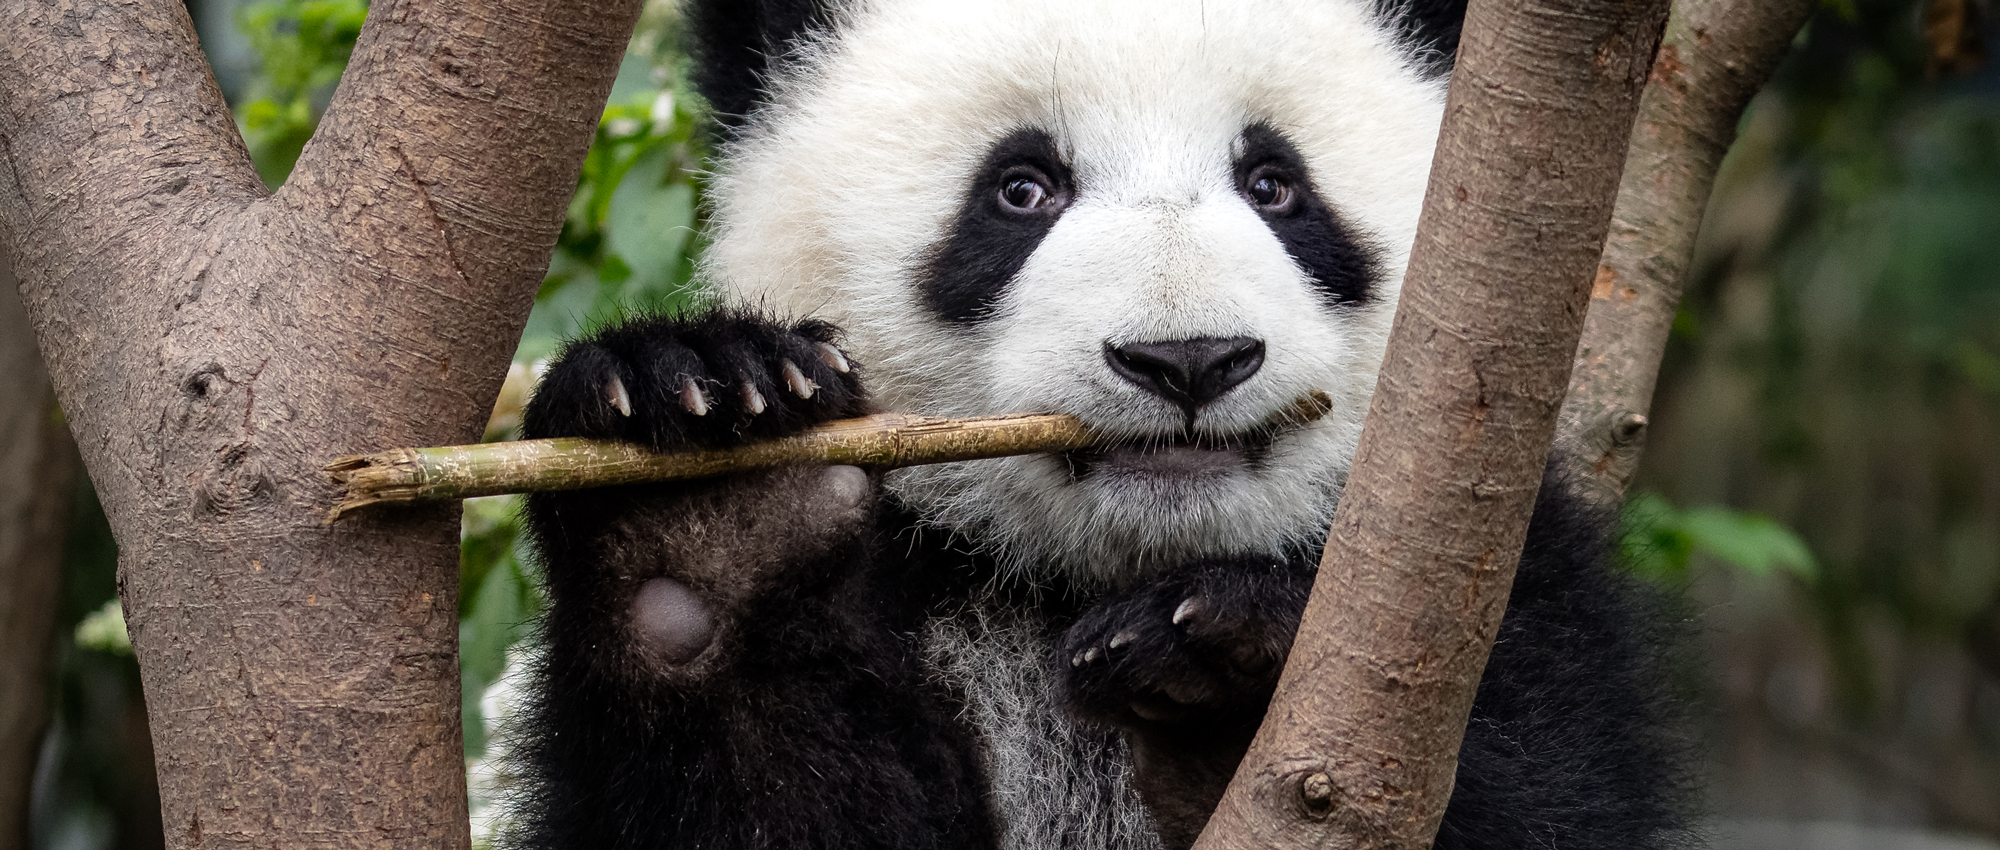 Giant panda (Ailuropoda melanoleuca) eating at the Chengdu Research Base of Giant Panda Breeding in Chengdu, China